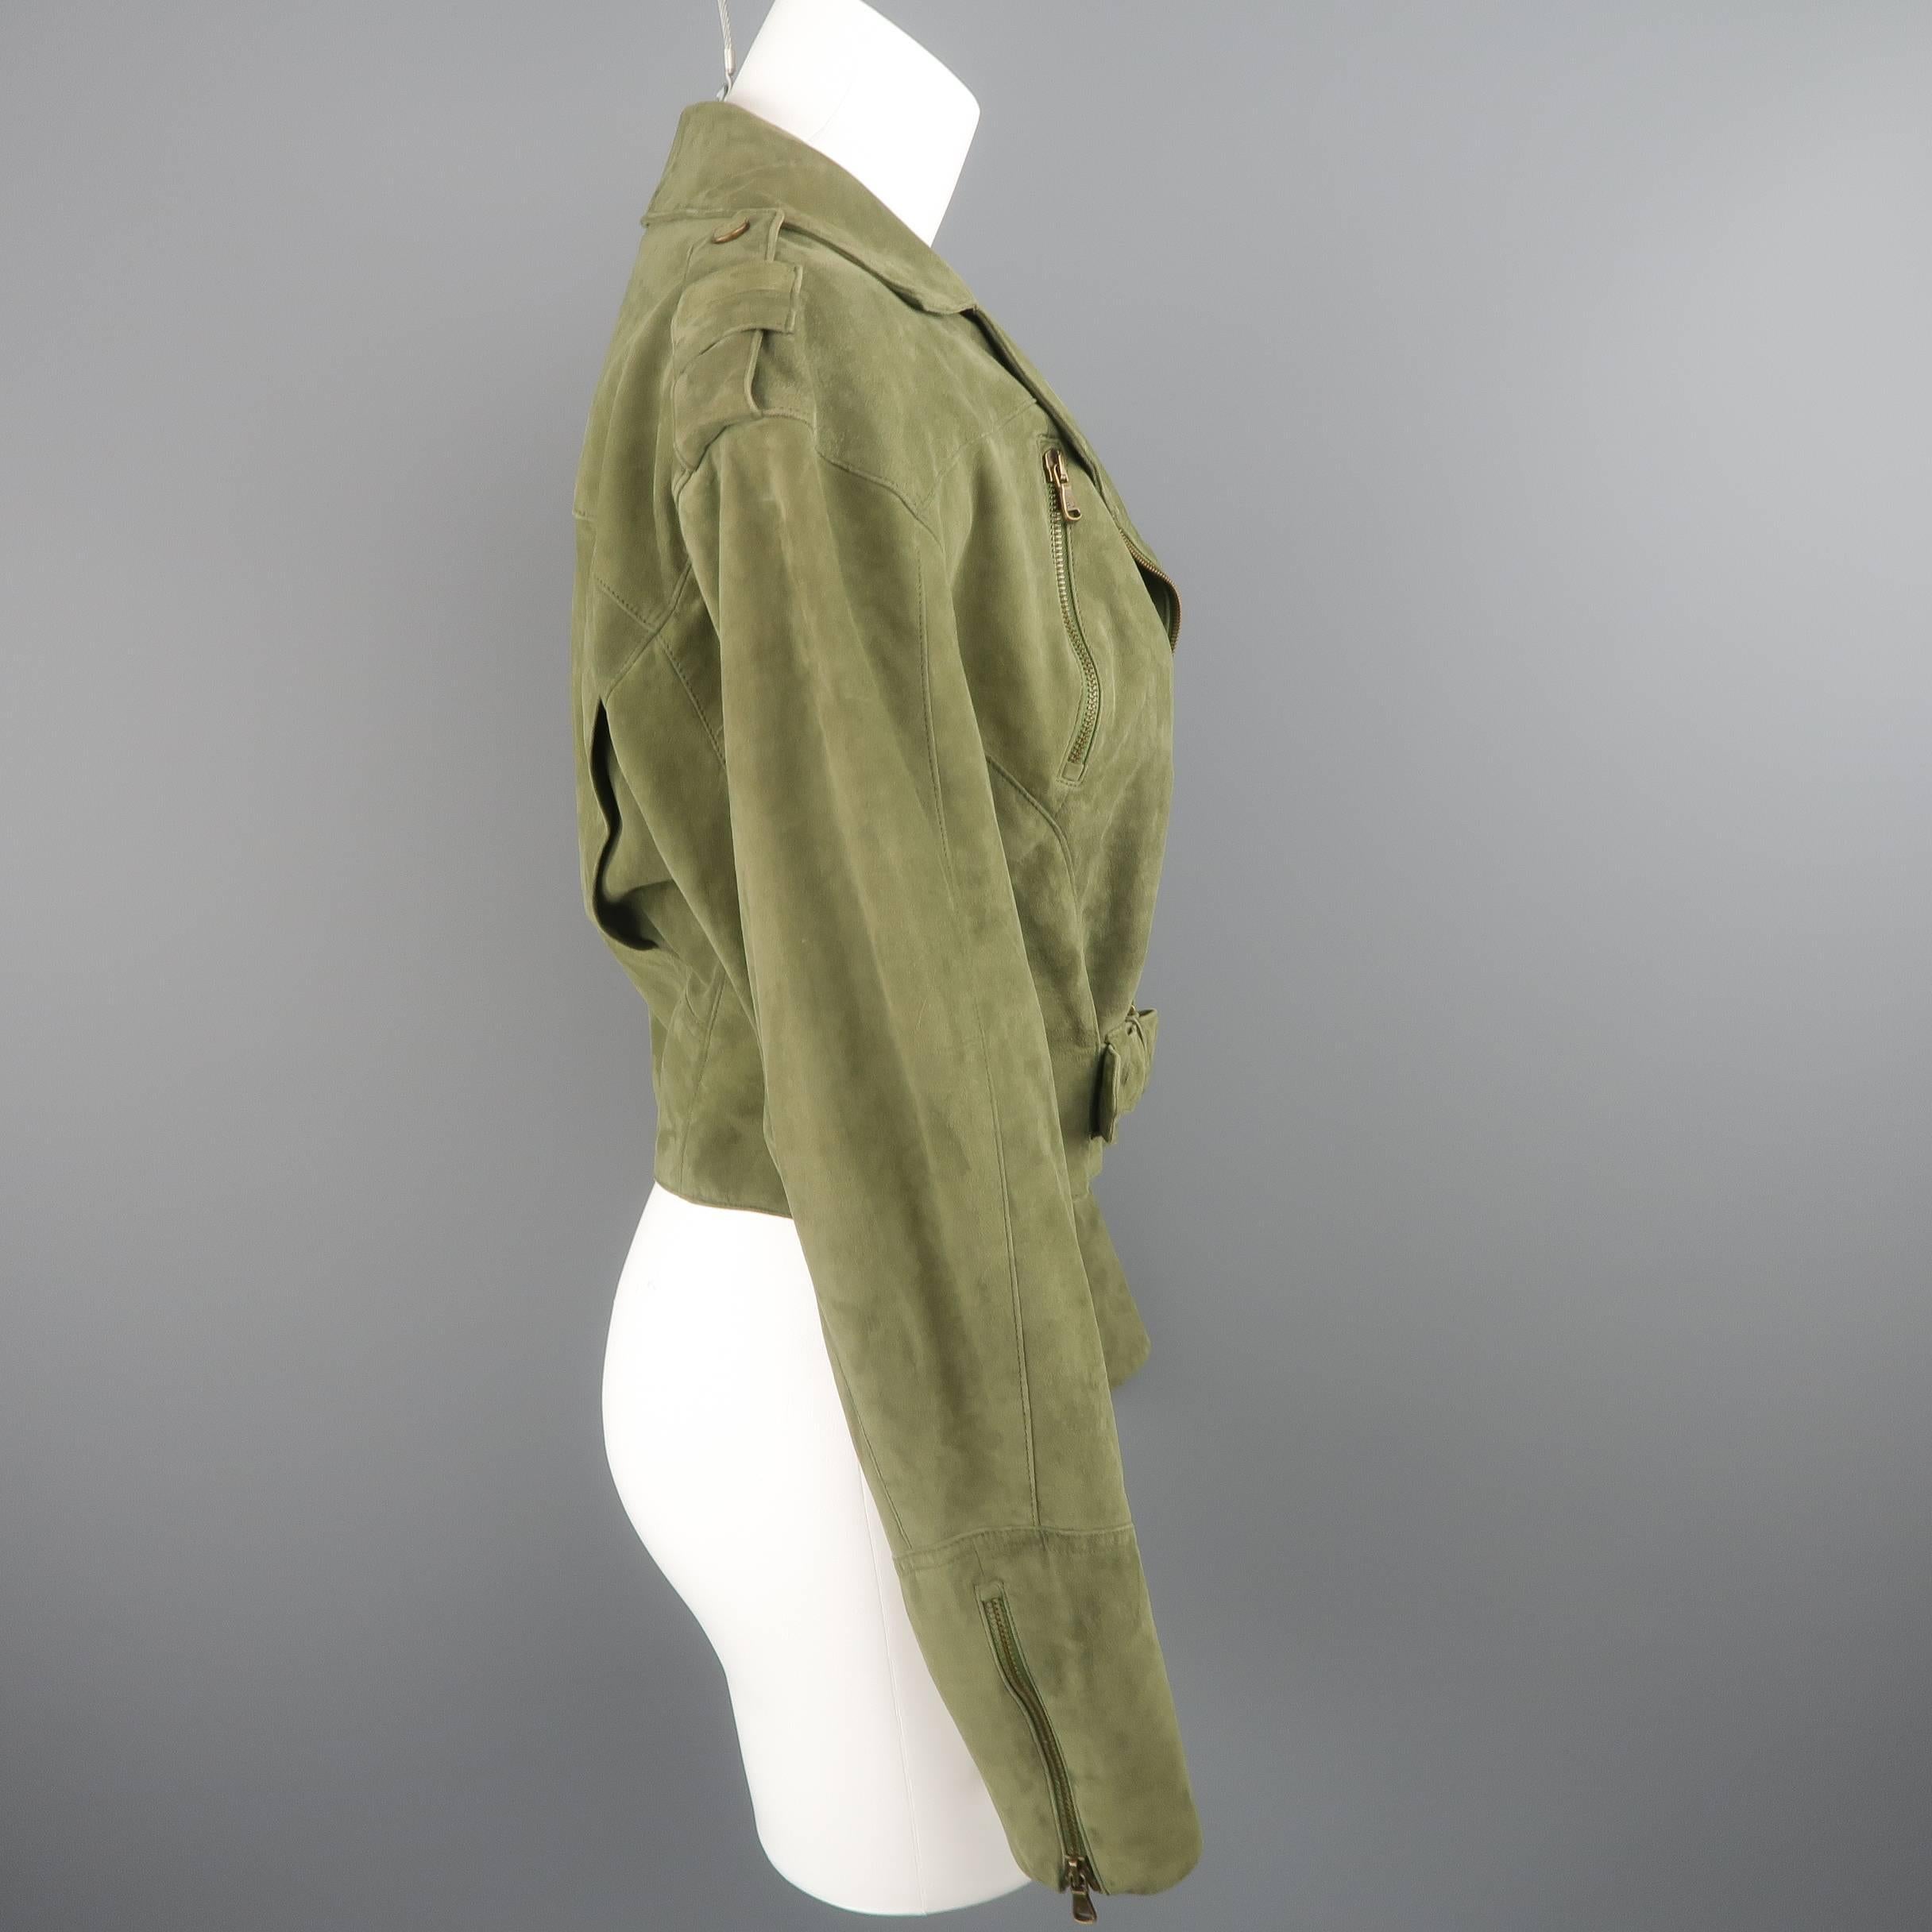 Brown RALPH LAUREN Size 6 Olive Suede Cropped Lace Up Biker Jacket